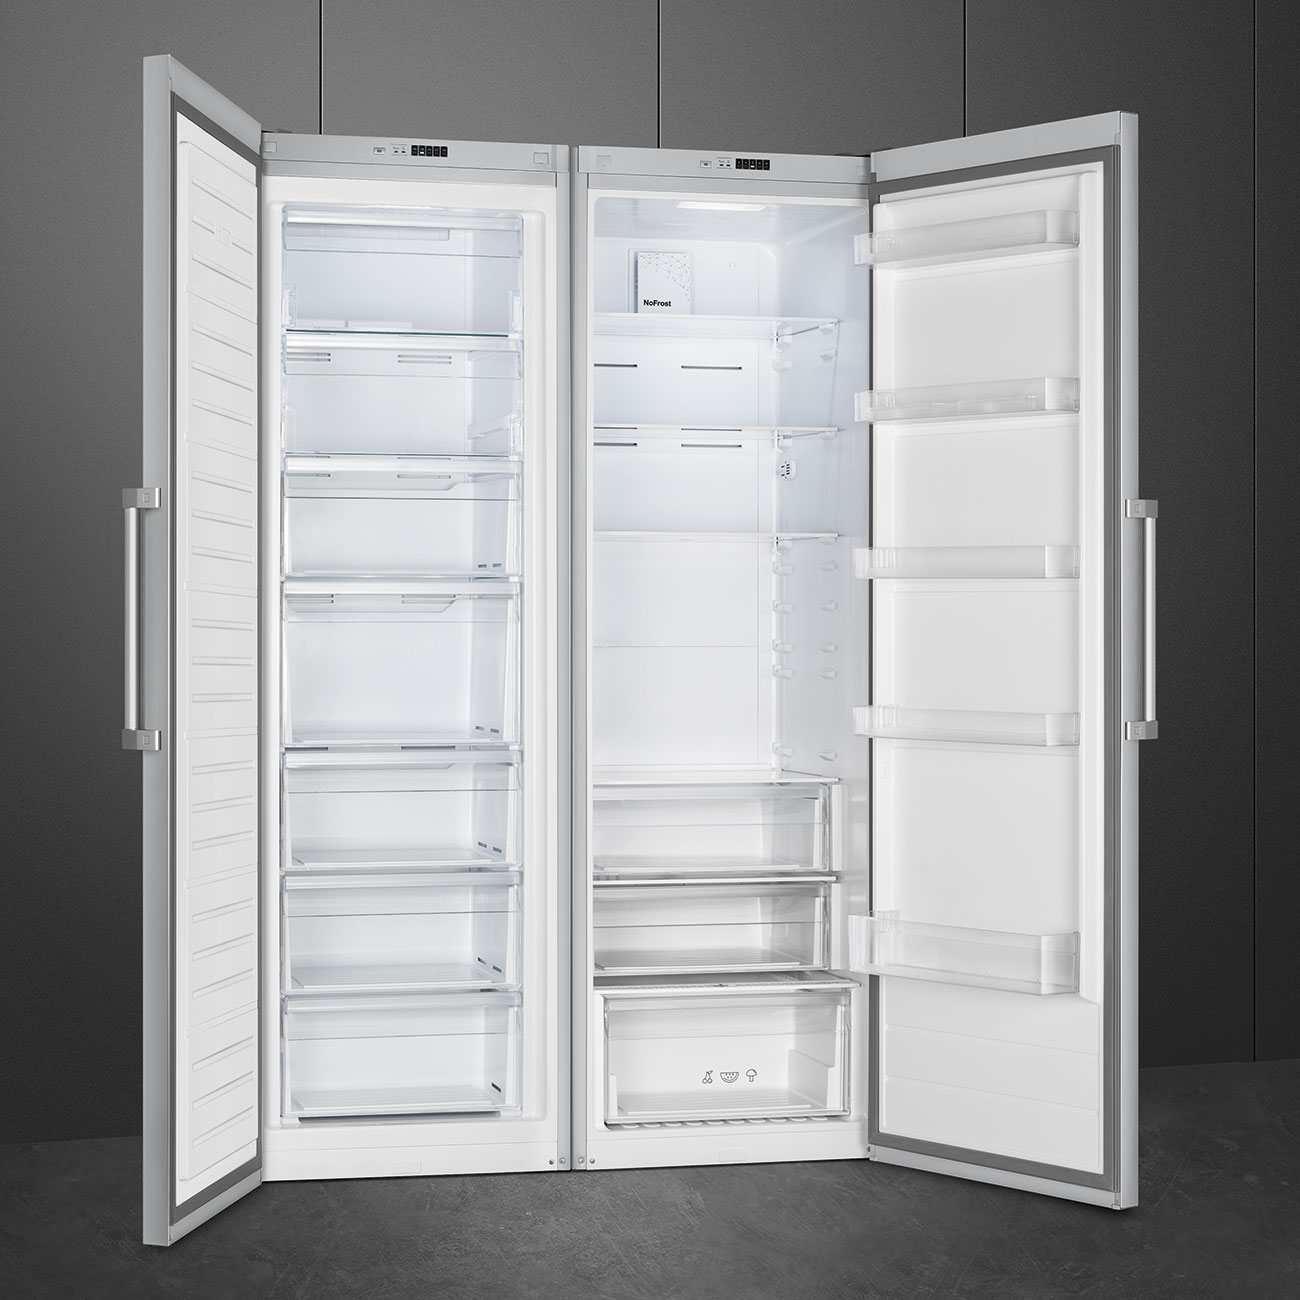 One Door Free standing refrigerator - Smeg_3